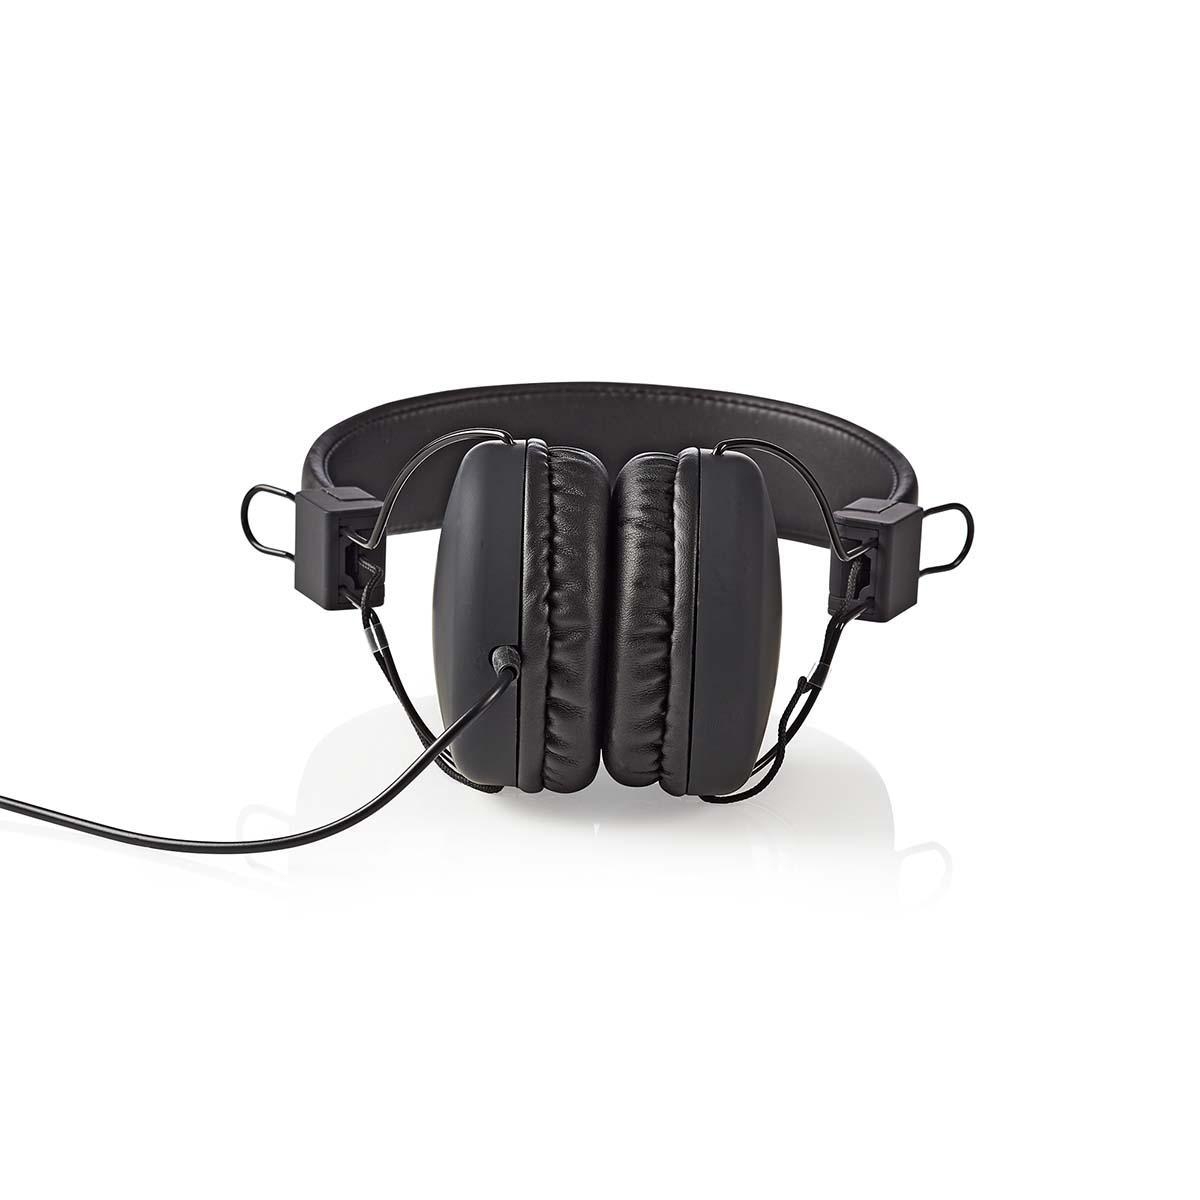 Nedis On-Ear Headphones Wired